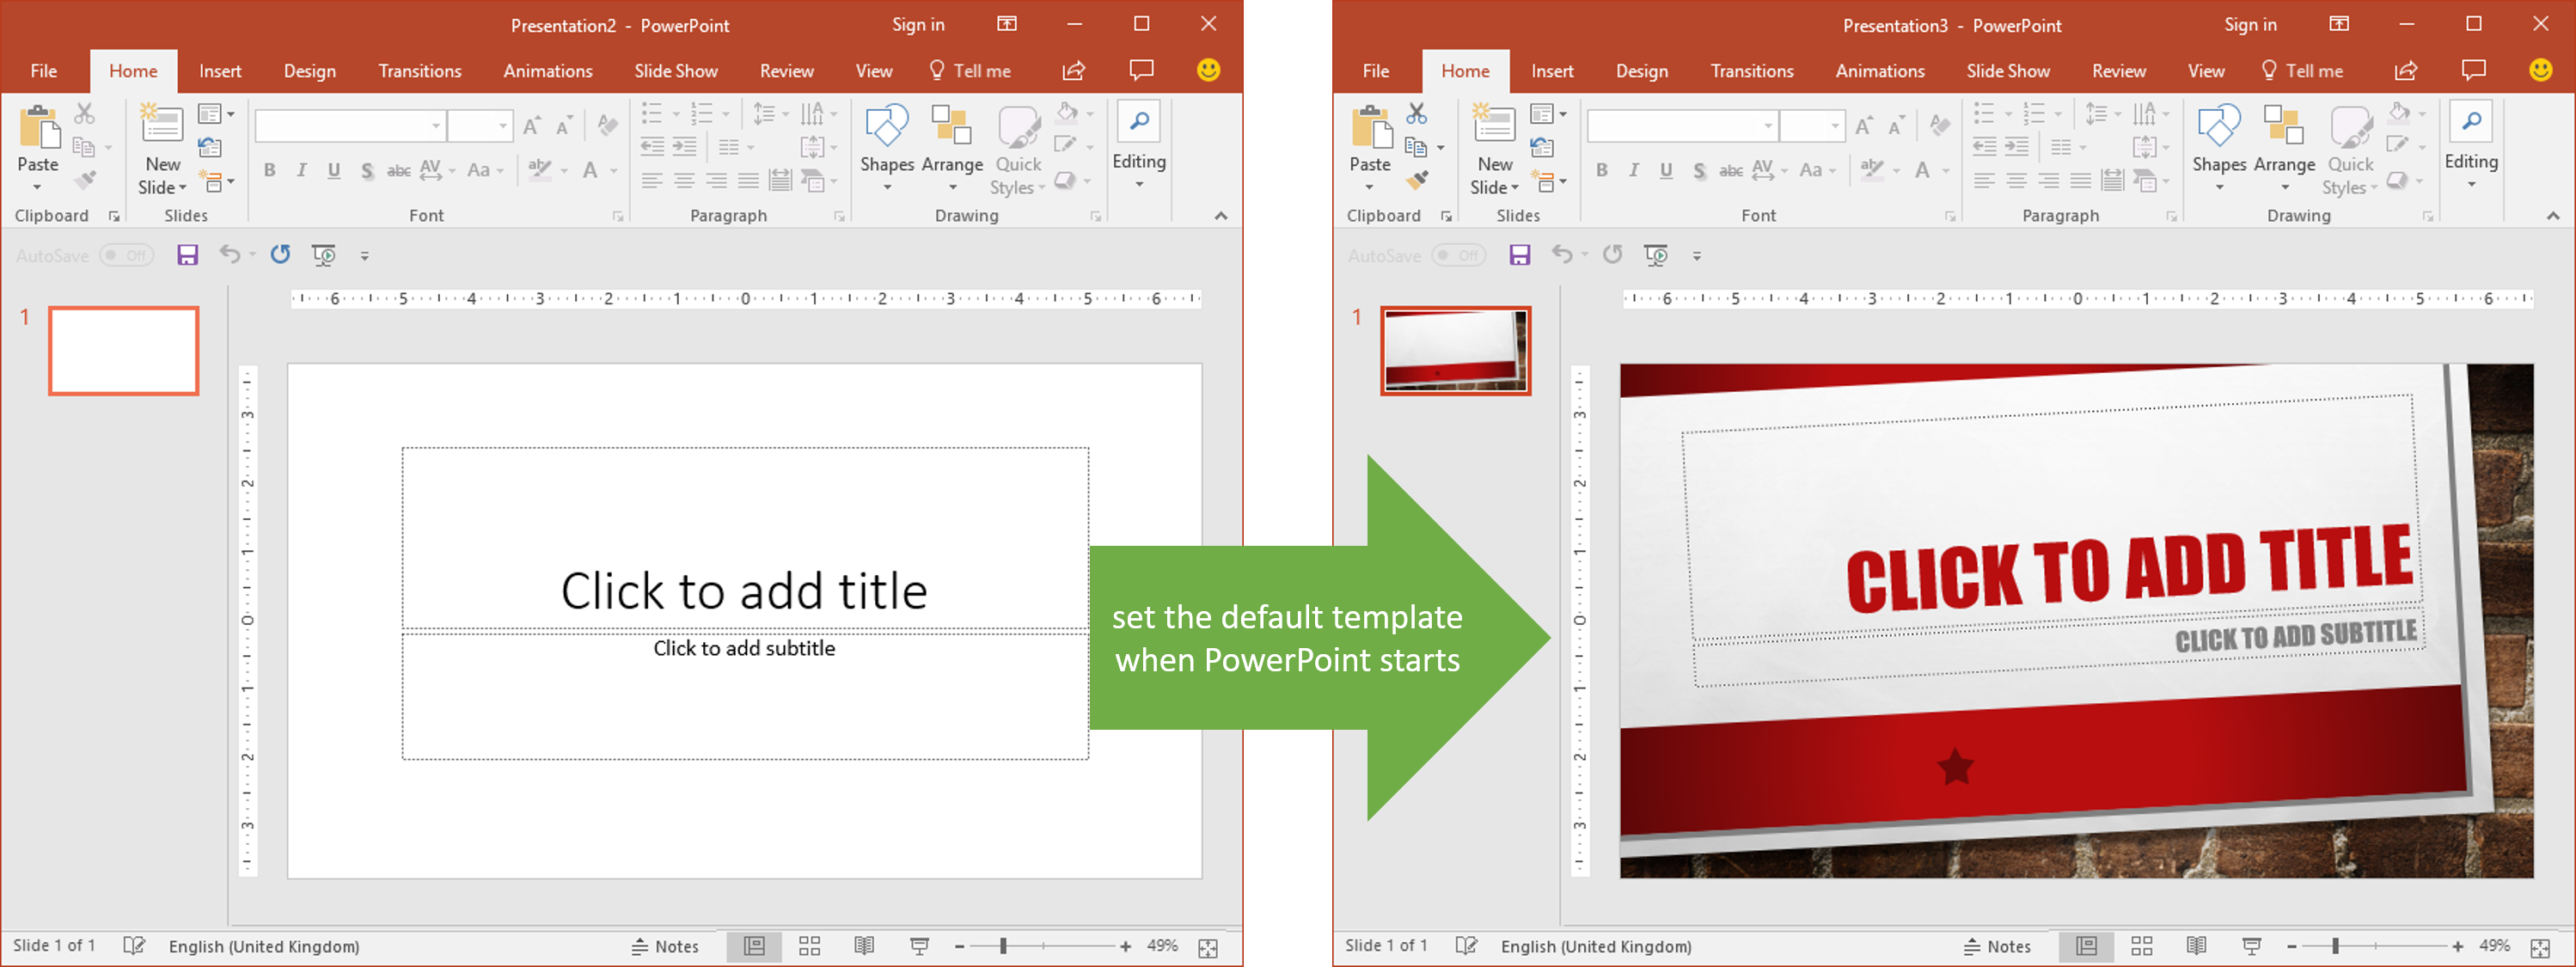 PowerPoint 2016 set the default template